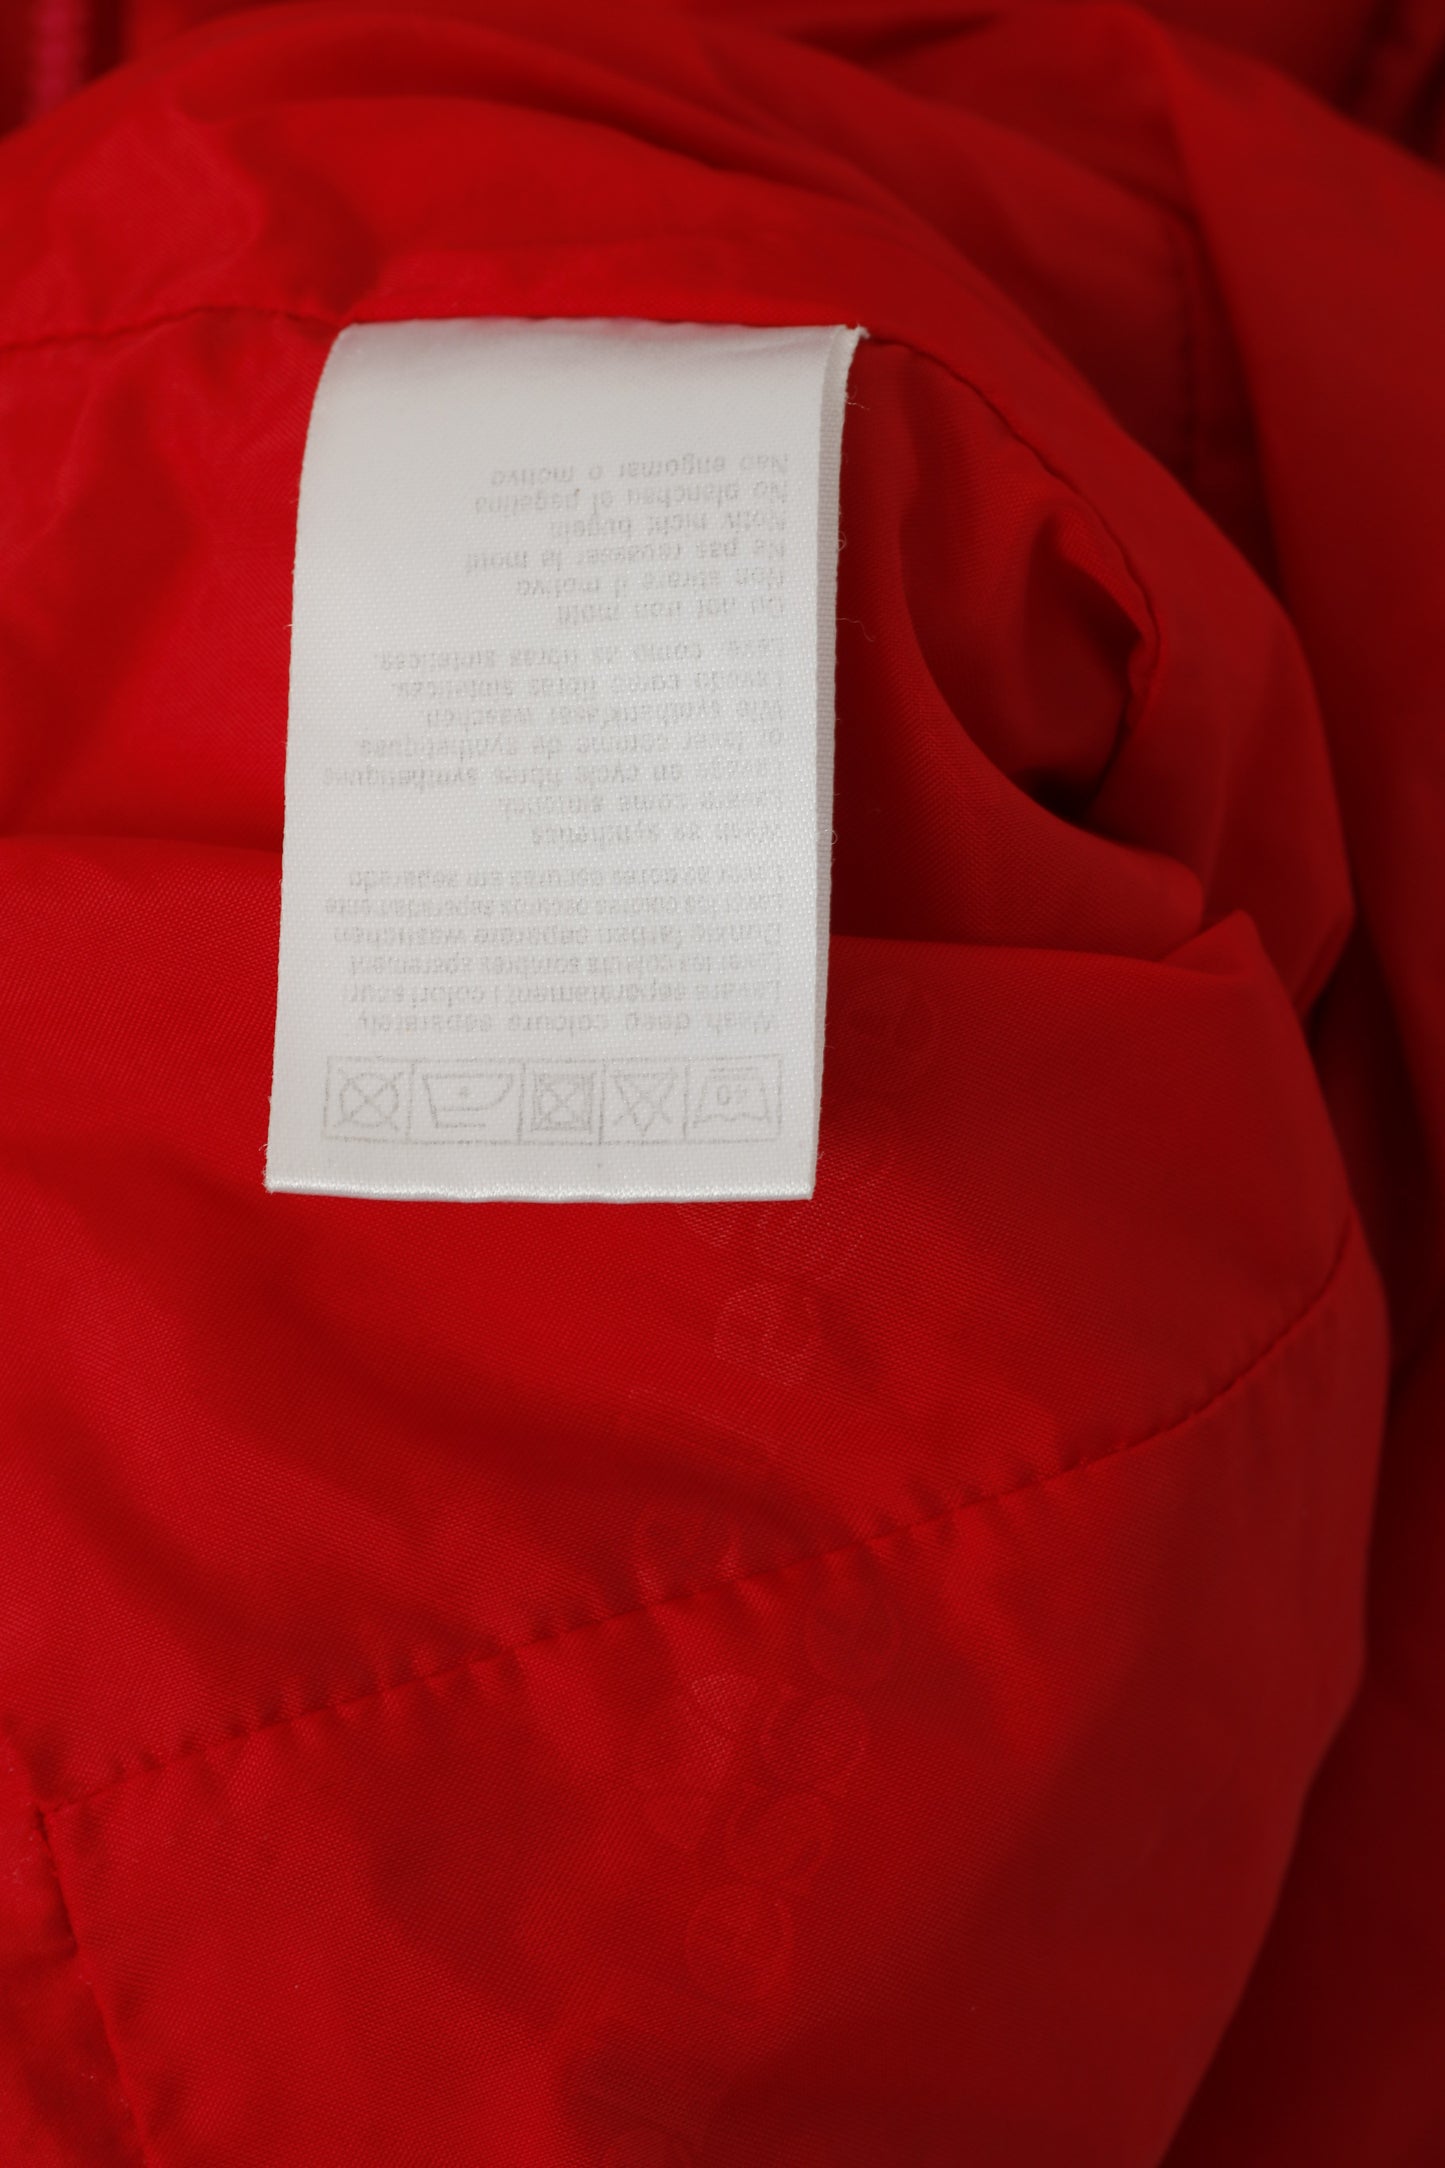 Ellesse Women 14 36'' M Jacket Red Full Zipper Padded Cropped Retro Top